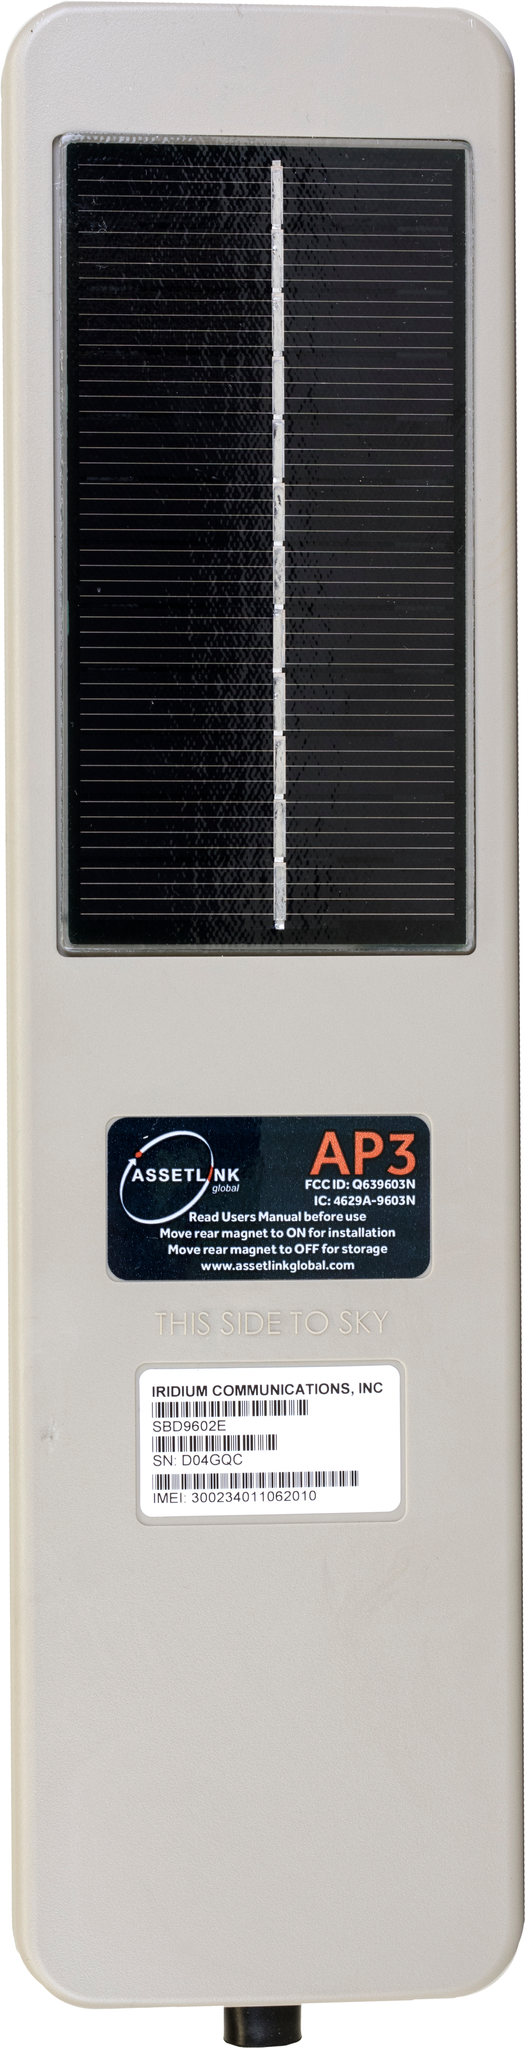 AssetPack-3 (AP3) image